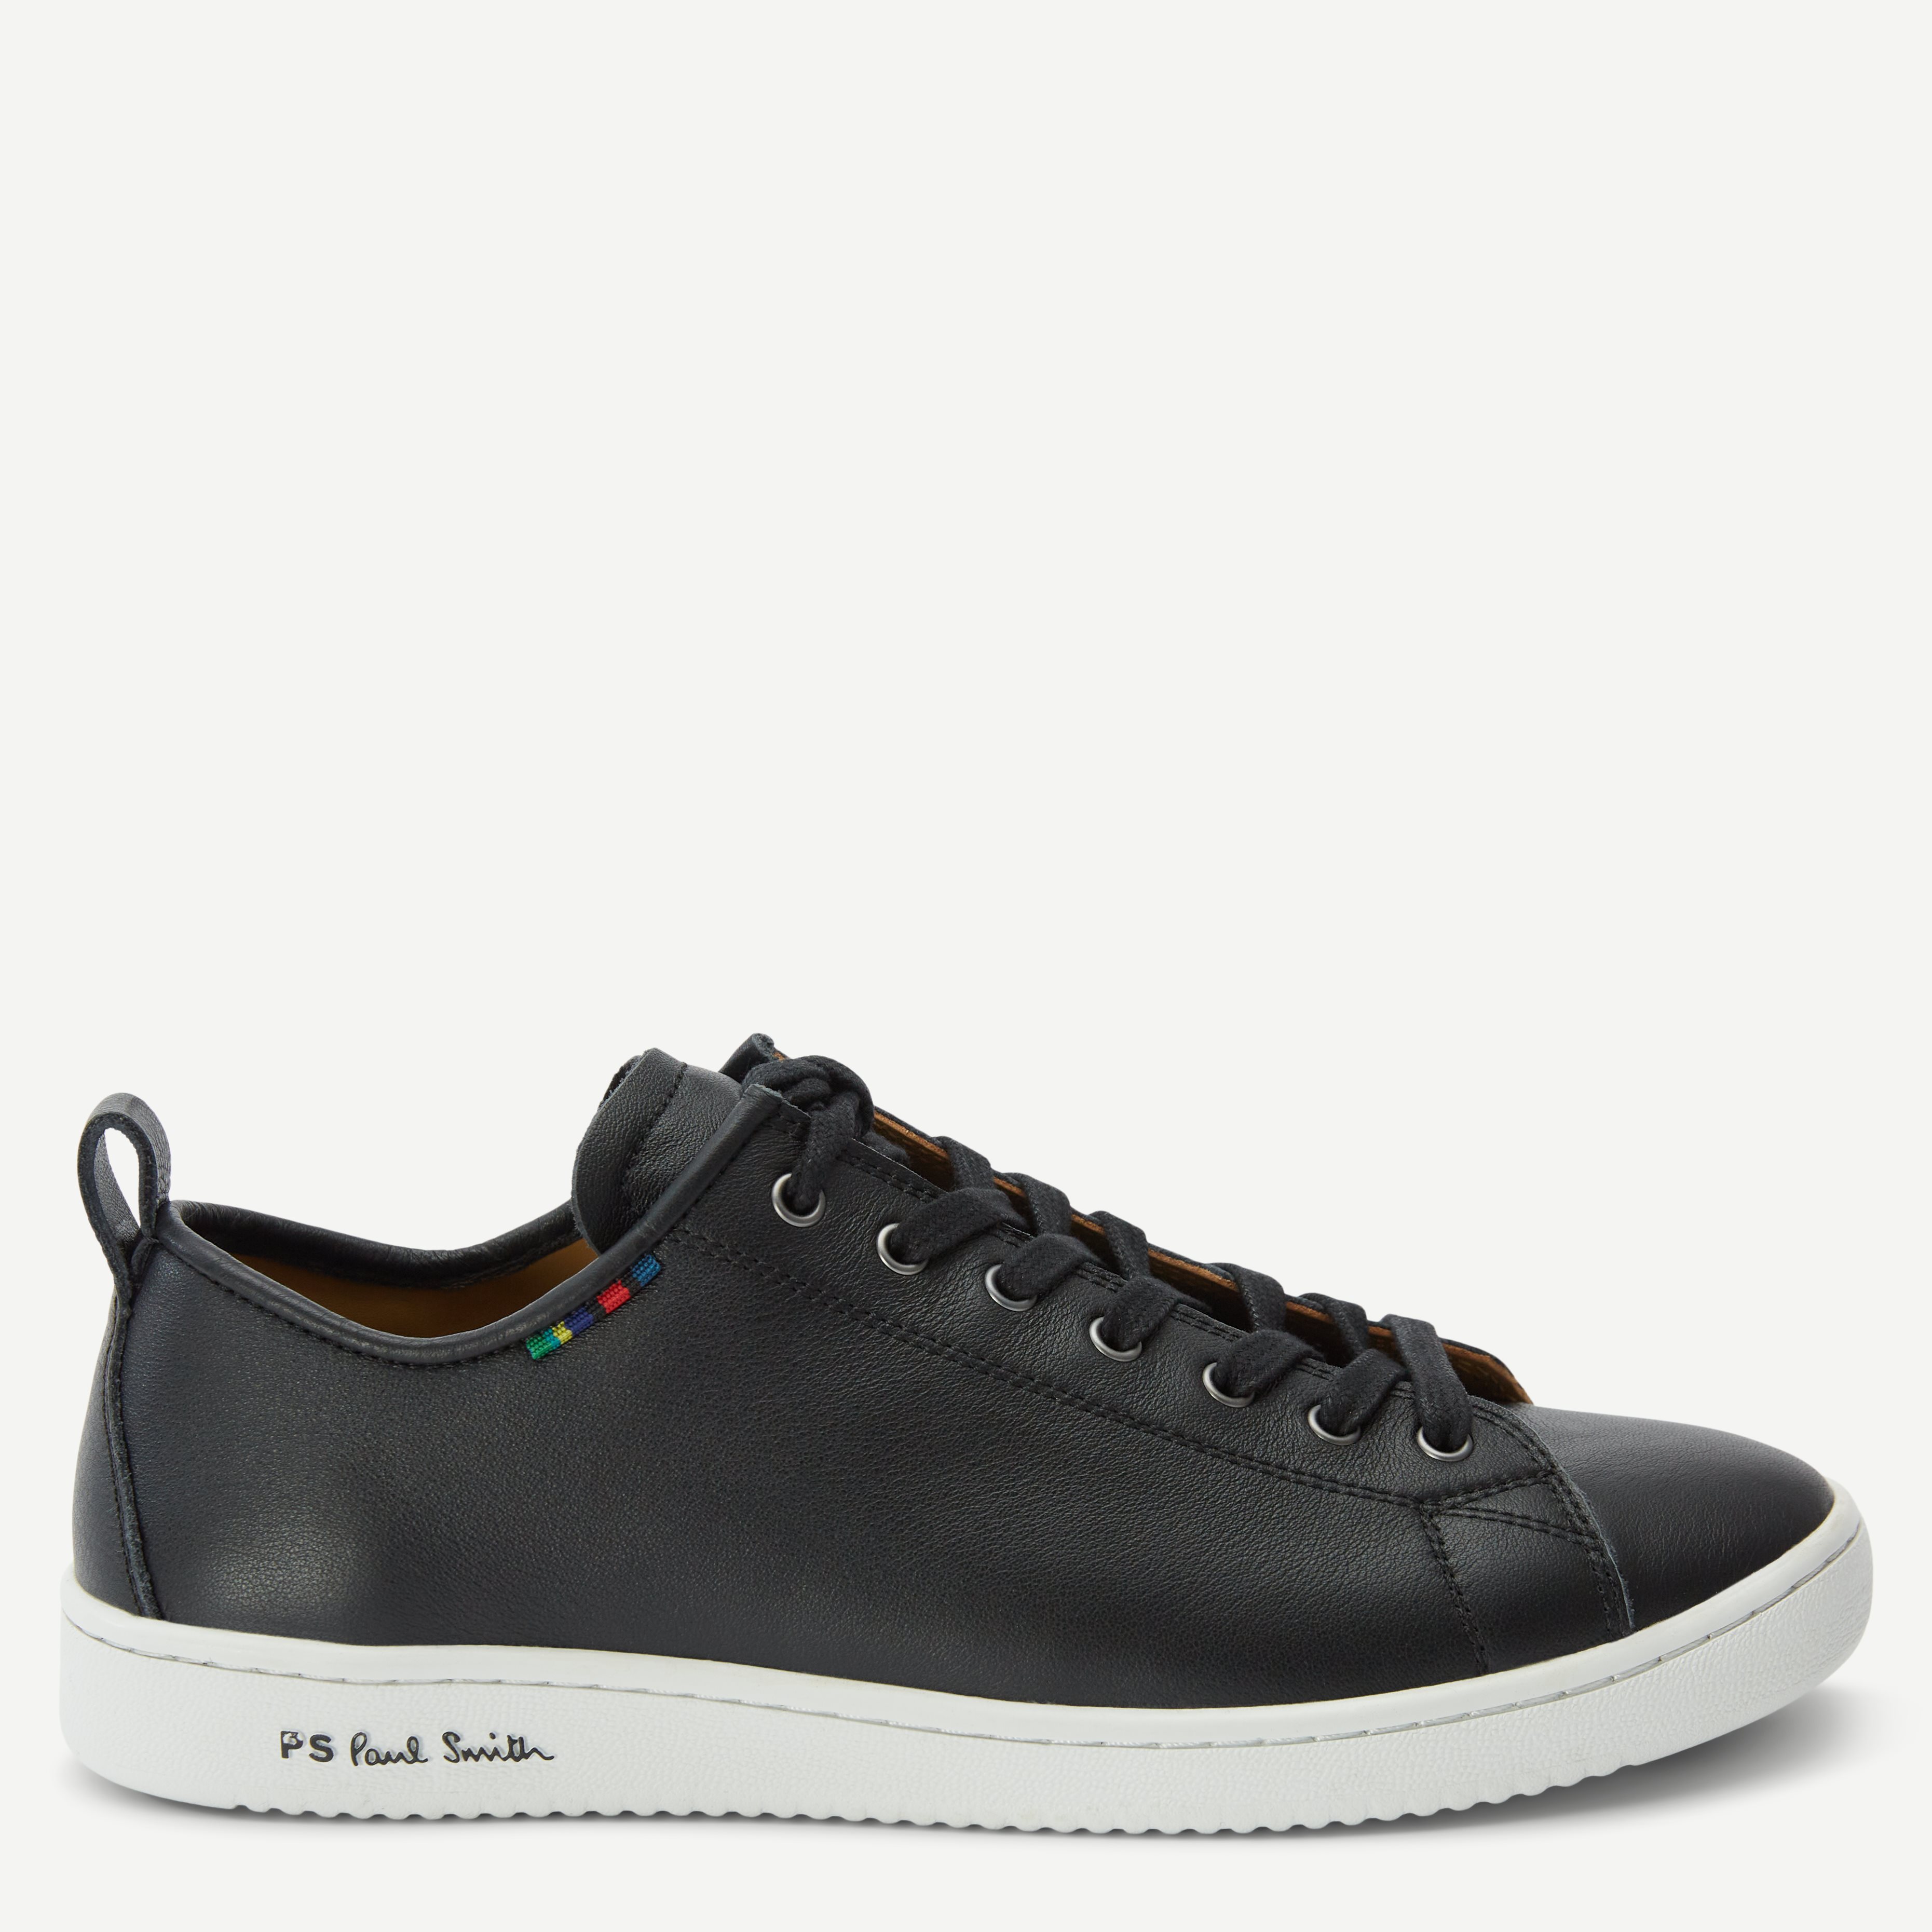 Paul Smith Shoes Shoes MIY02-ASET MENS SHOE MIYATA BLACK Black